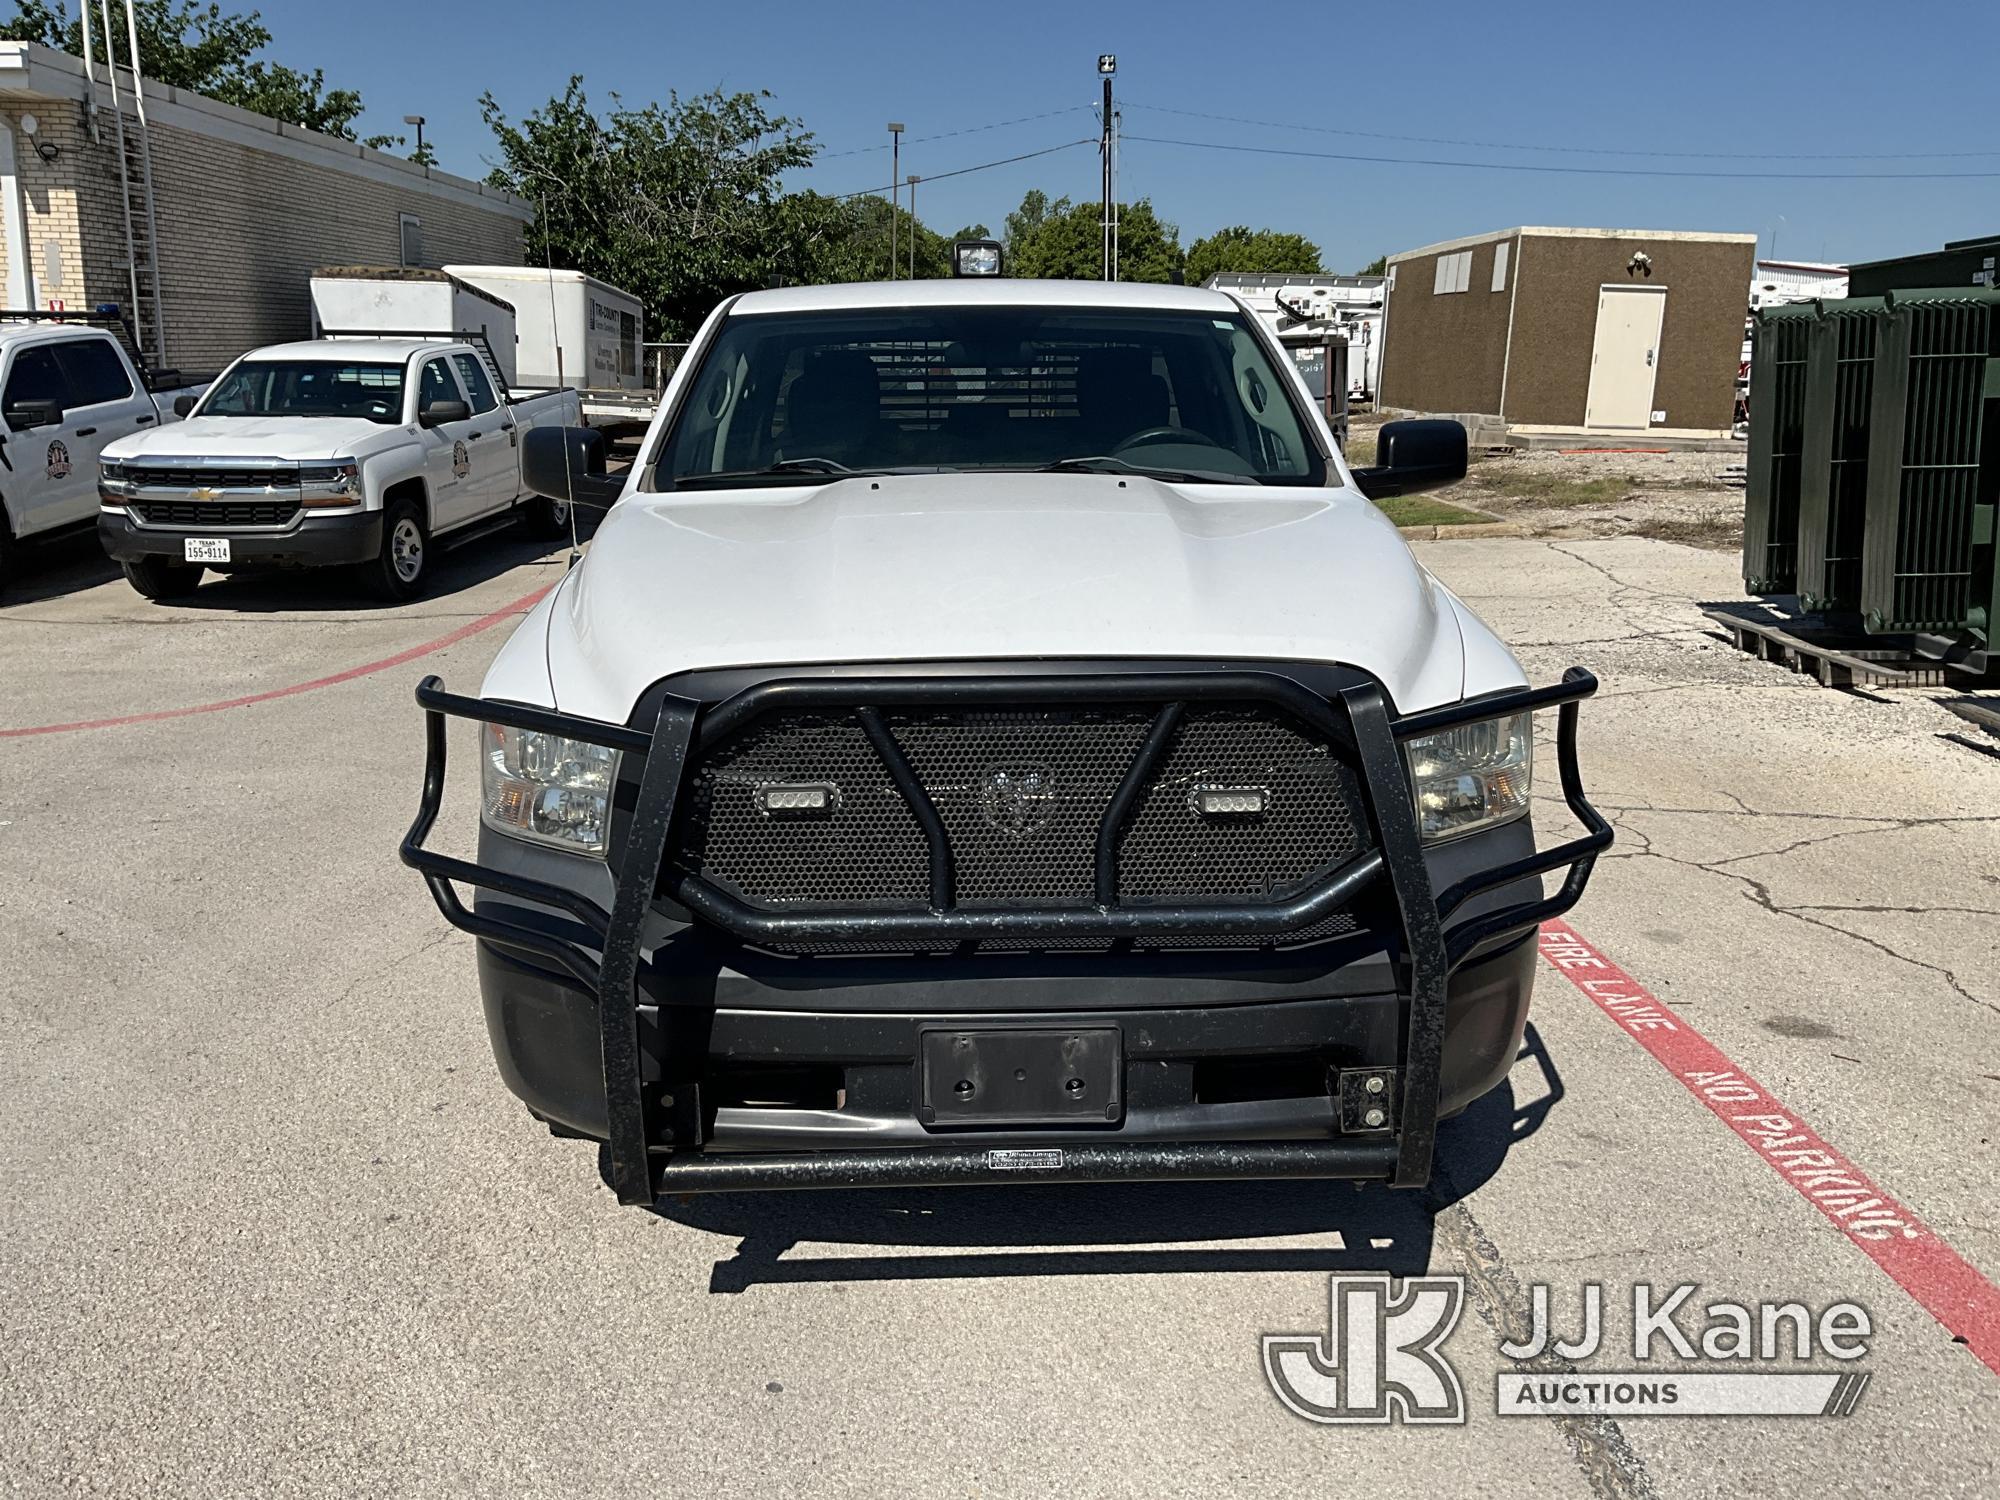 (Azle, TX) 2014 RAM 1500 4x4 Extended-Cab Pickup Truck Runs & Moves) (ABS Warning Light On, TPMS War